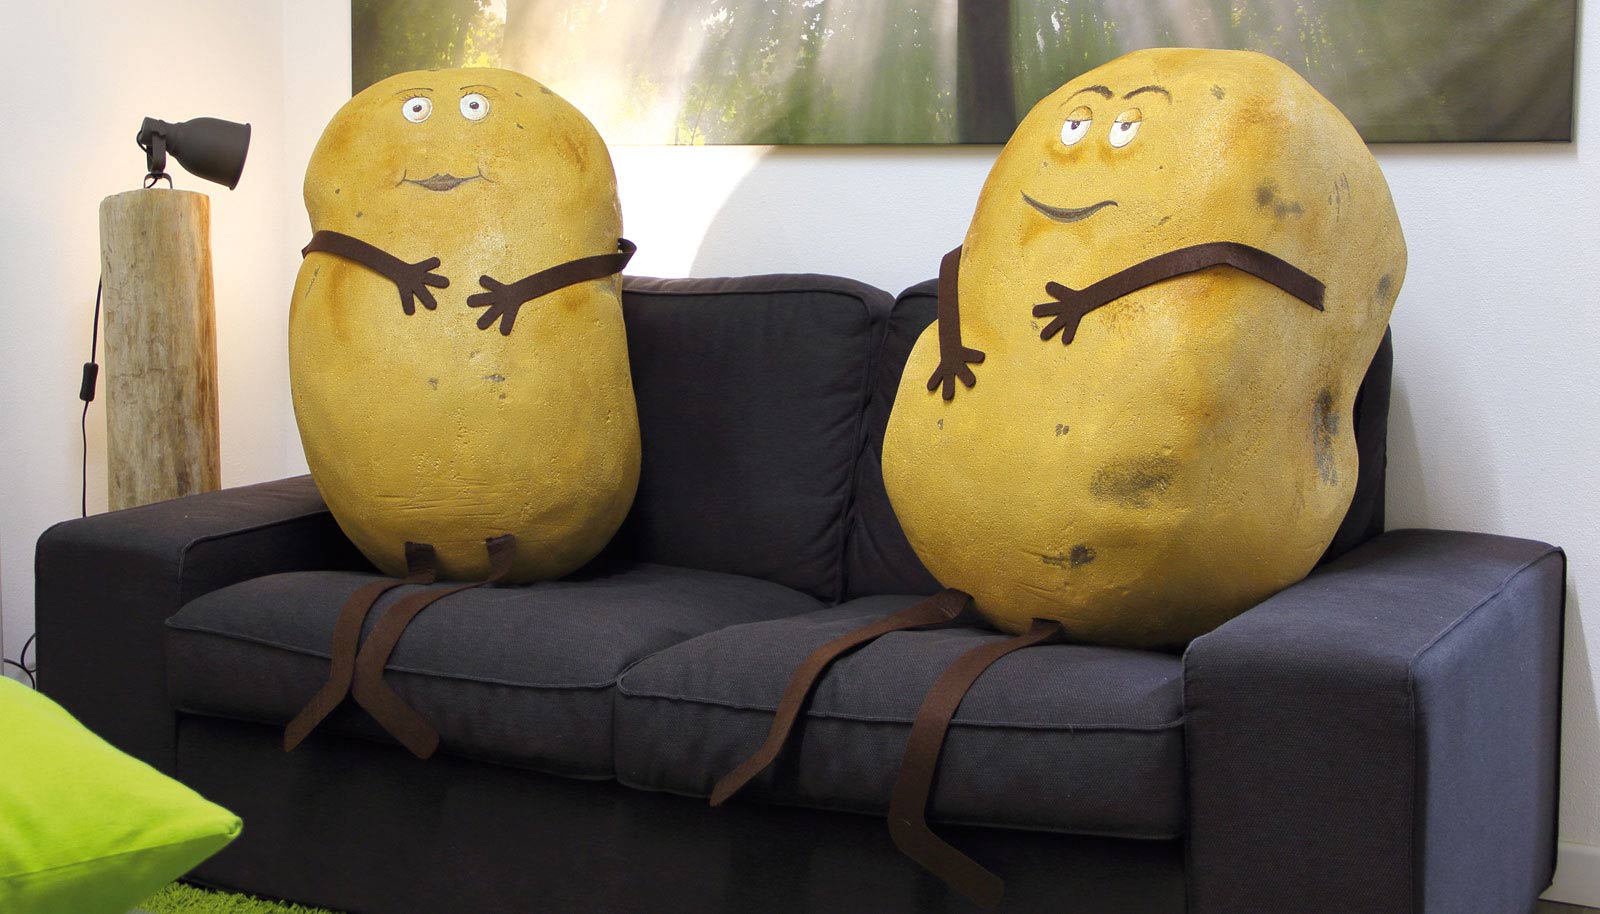 scultura figurativa di due patata di dimensione umana sedute su un divano